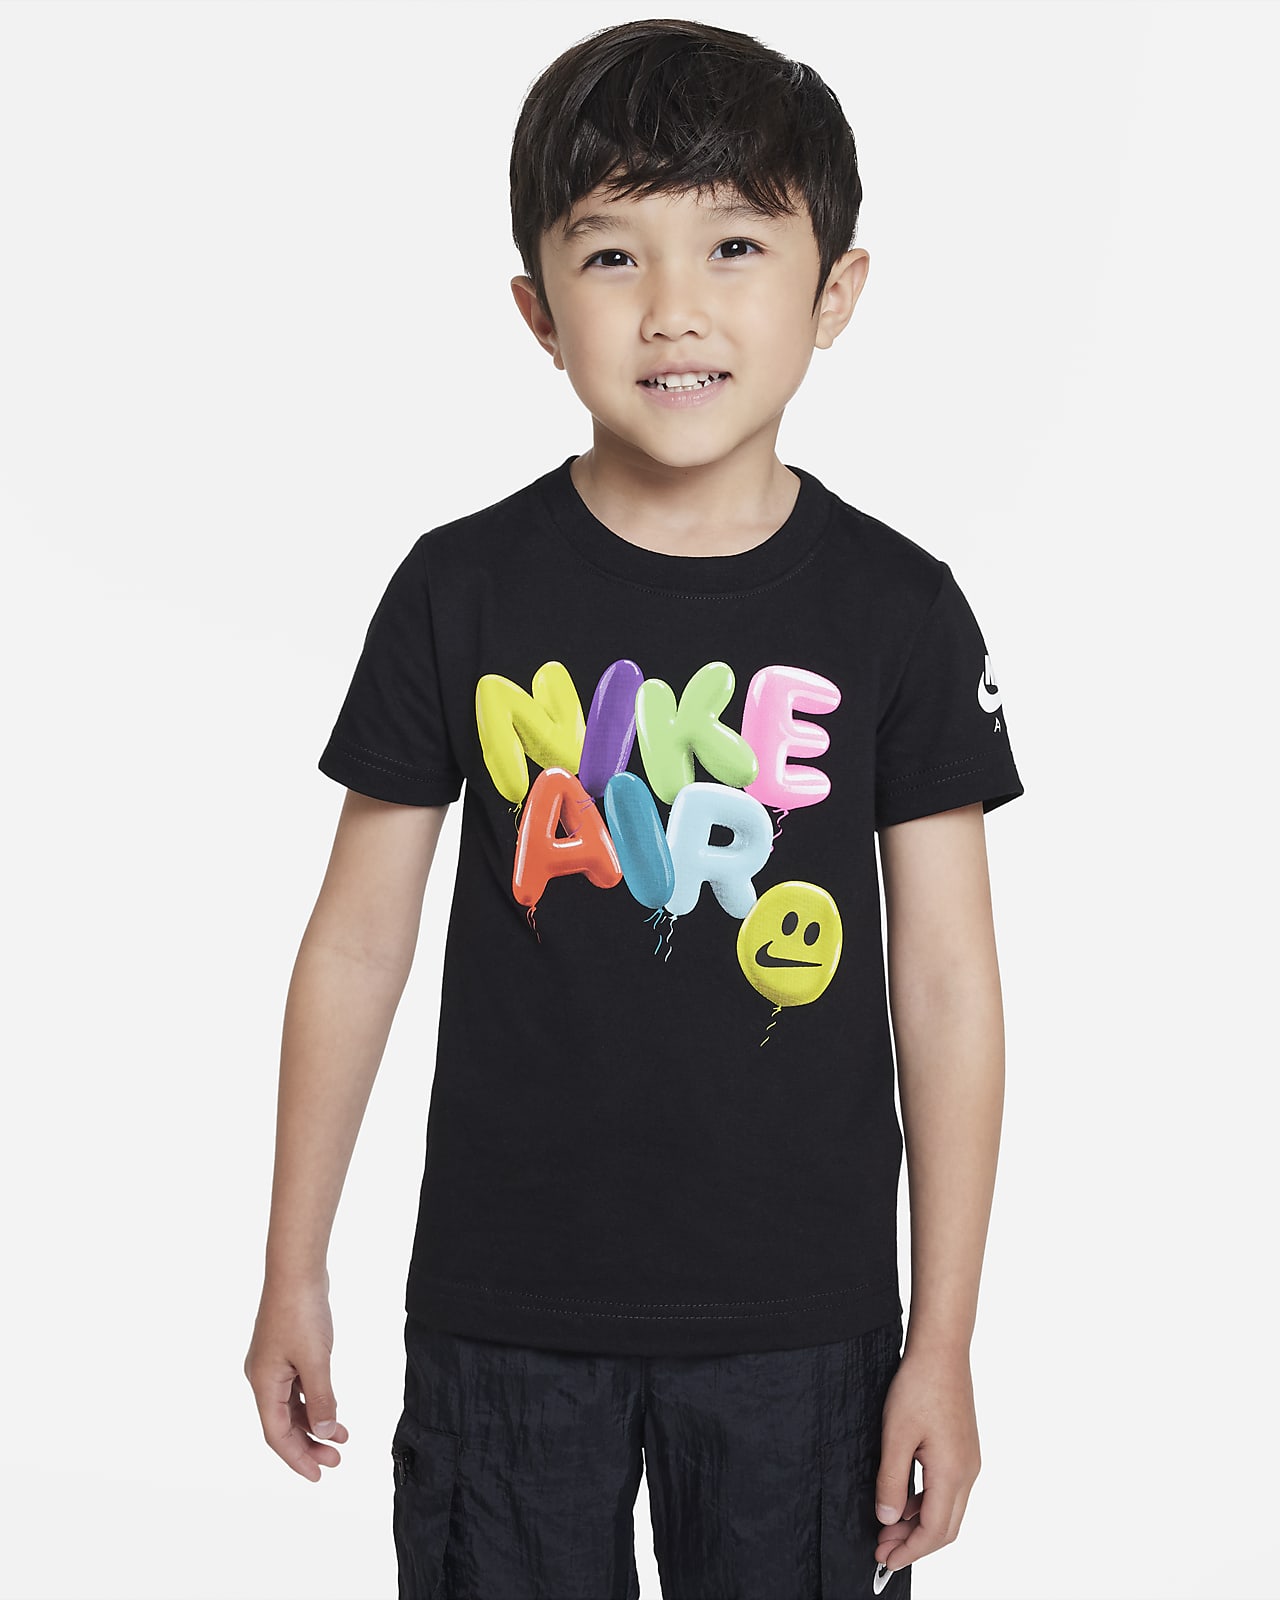 Nike Balloon Tee Little T-Shirt.